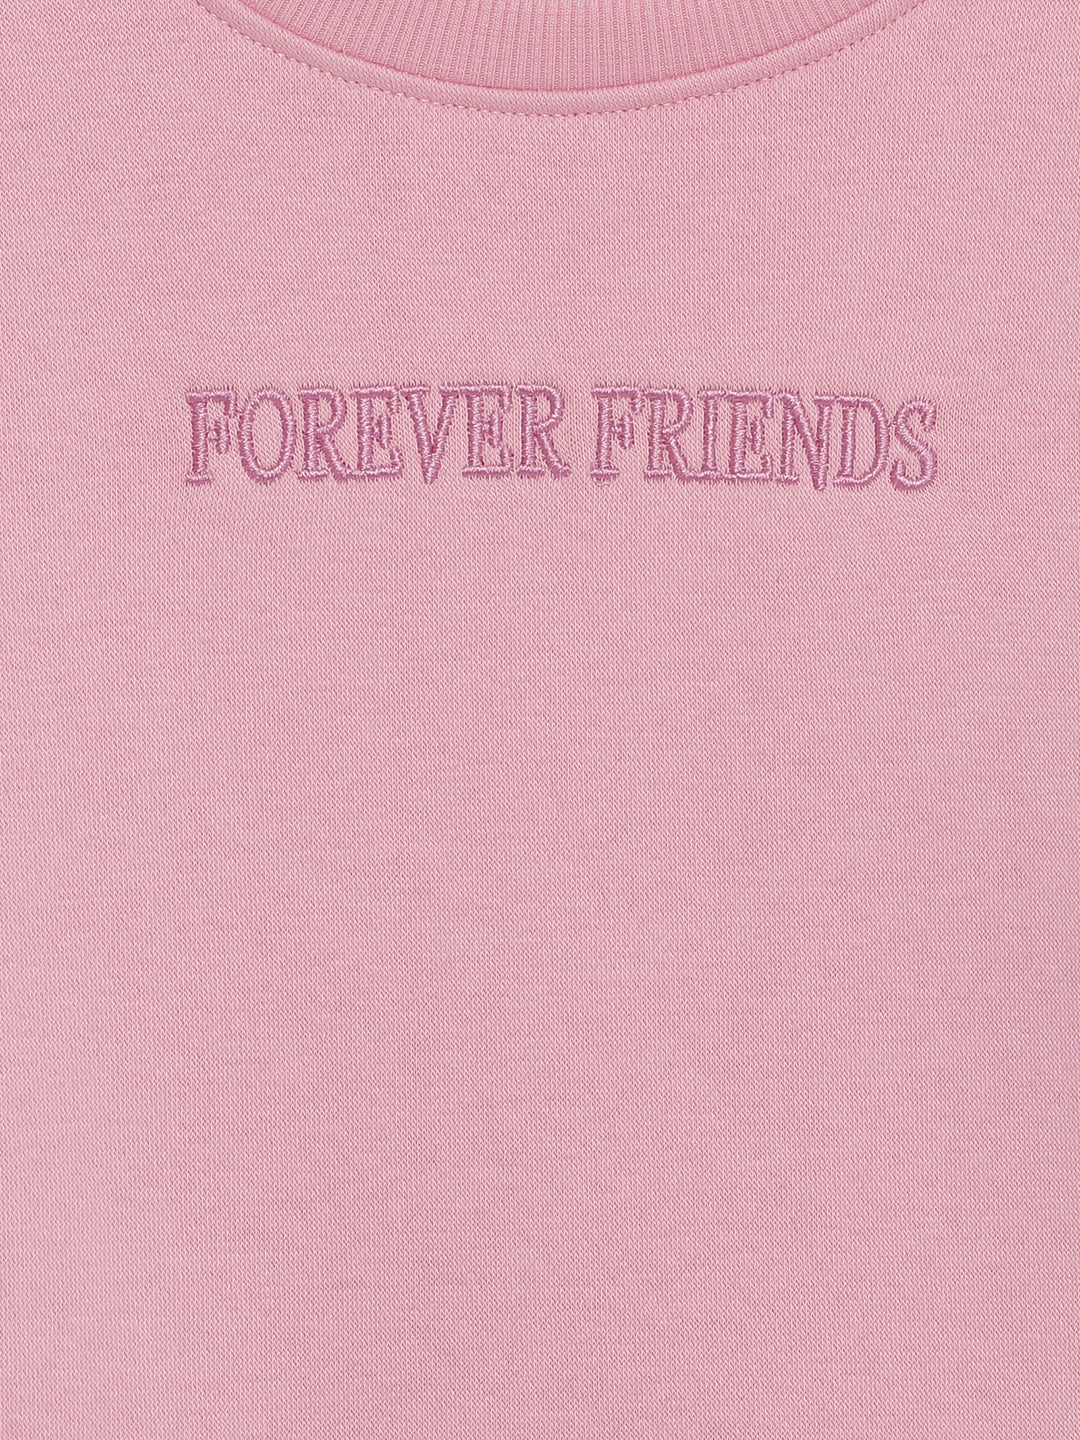 Girls Forever Friends Crewneck Sweatshirt